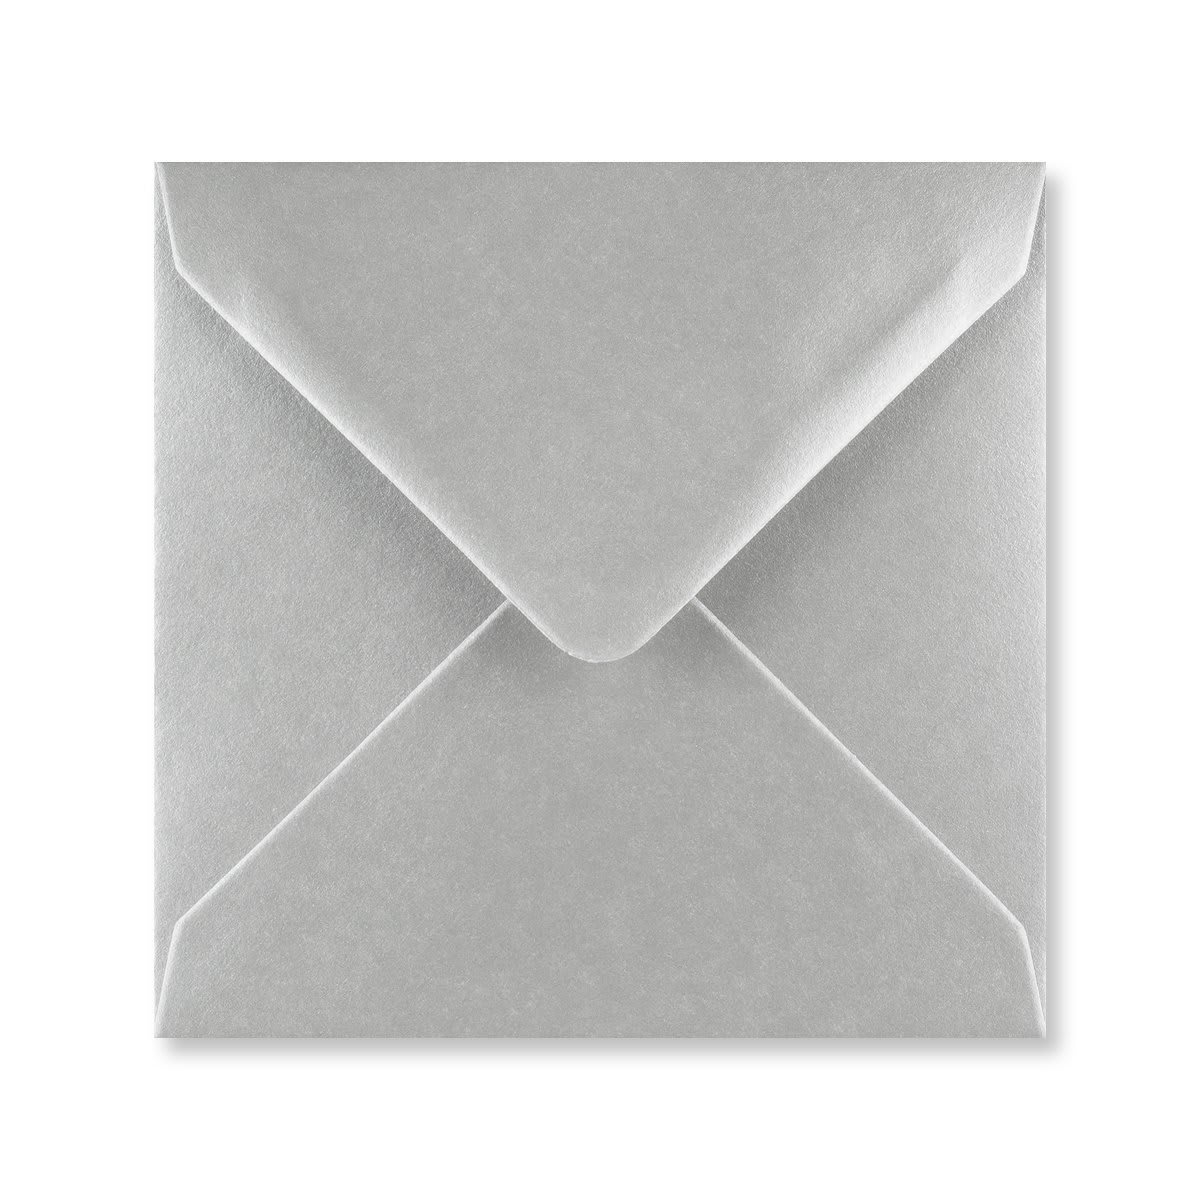 140x140mm Metallic Silver Square Gummed 100gsm Wove Envelopes